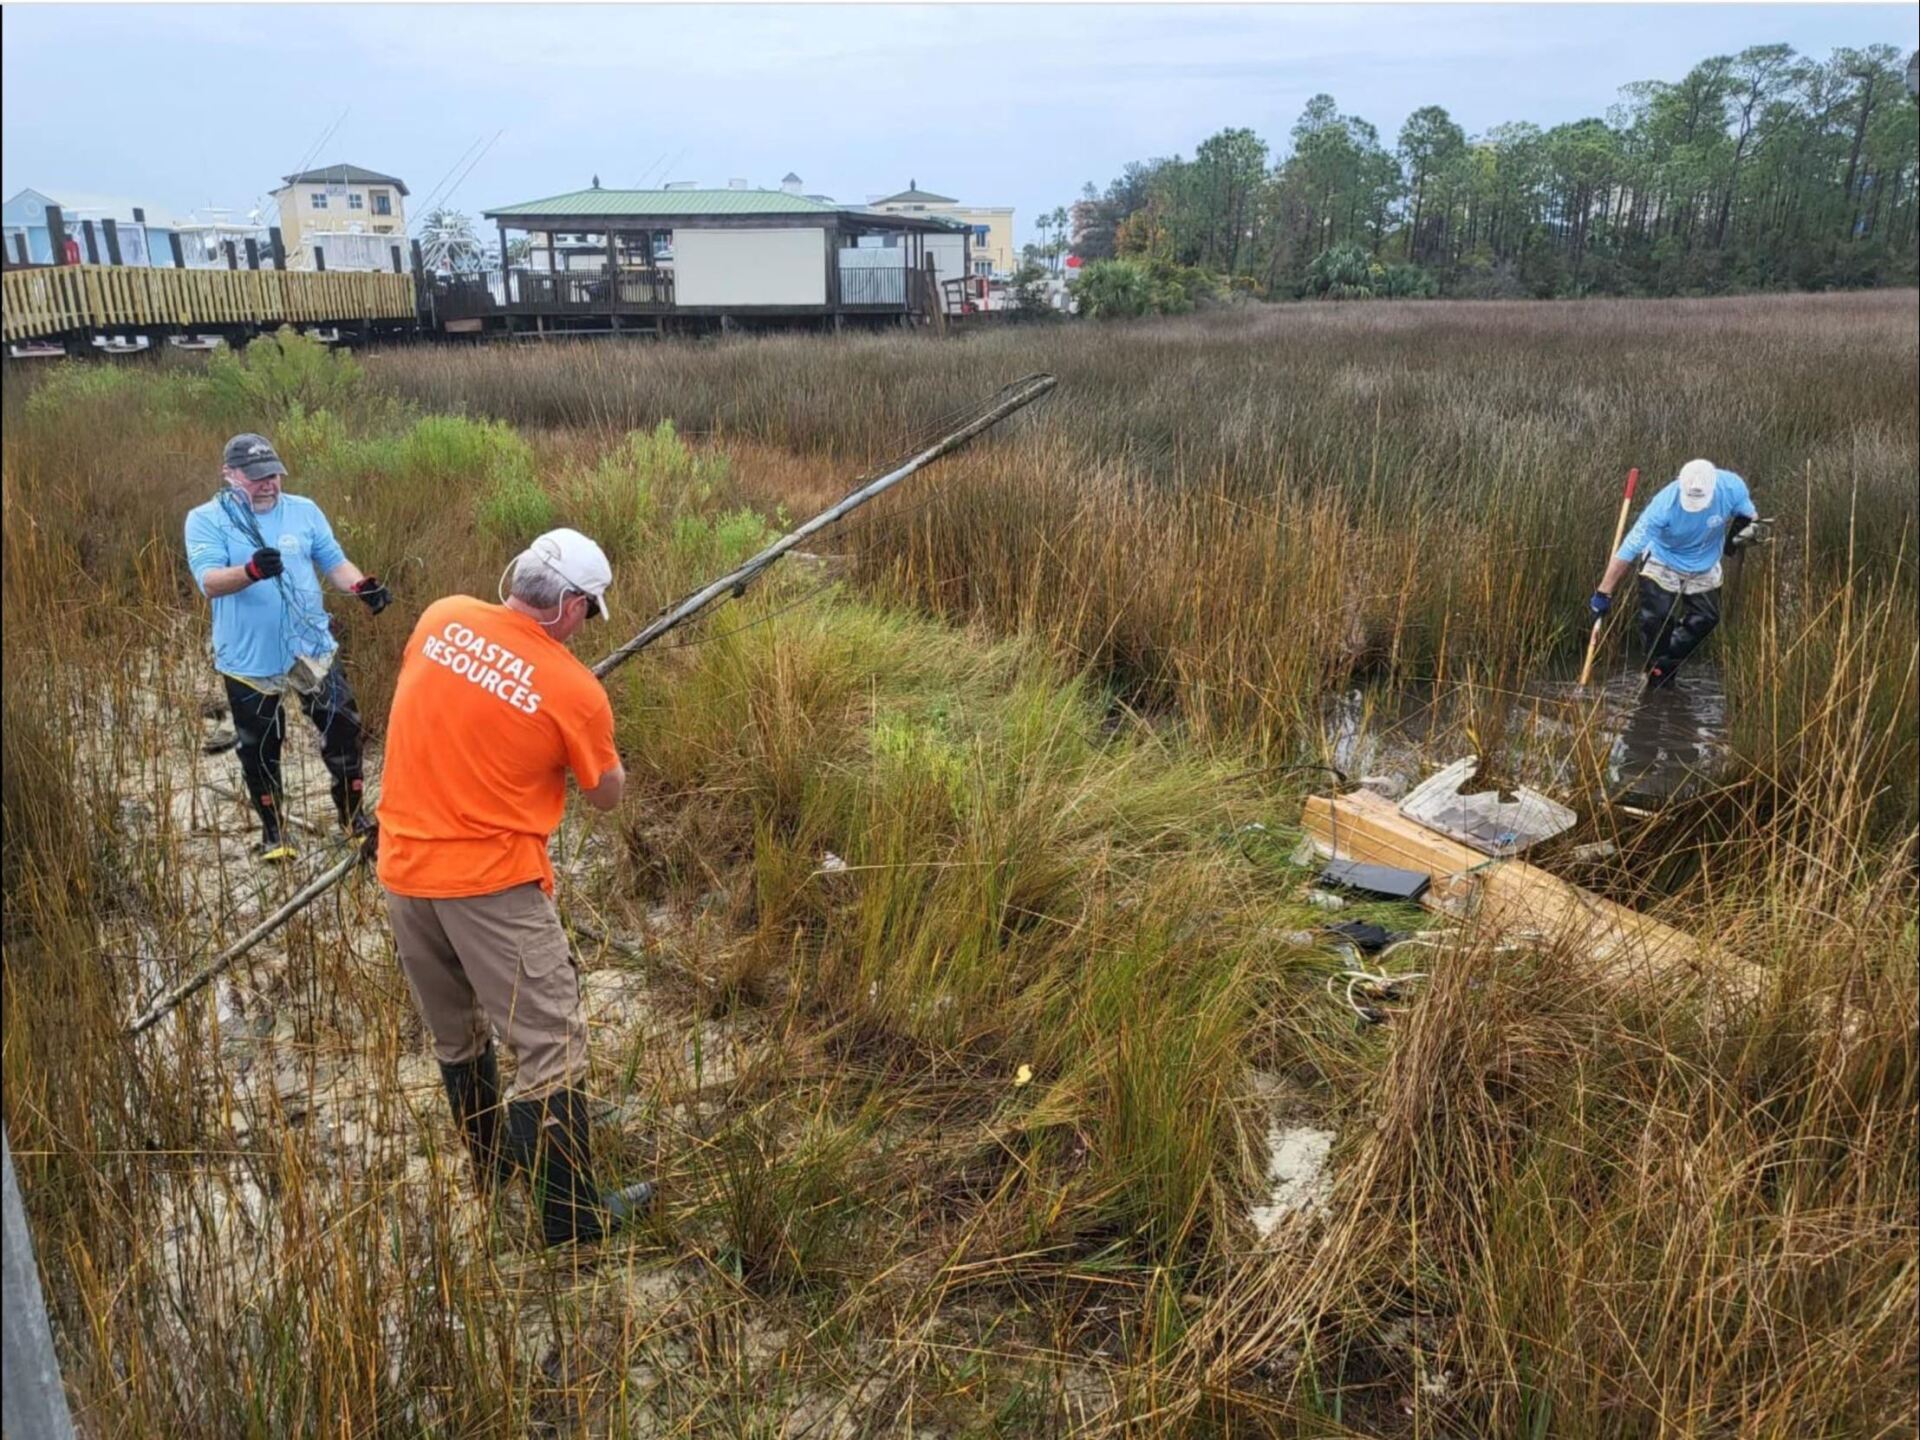 Coastal Resources workers removing debris in Orange Beach, Alabama.